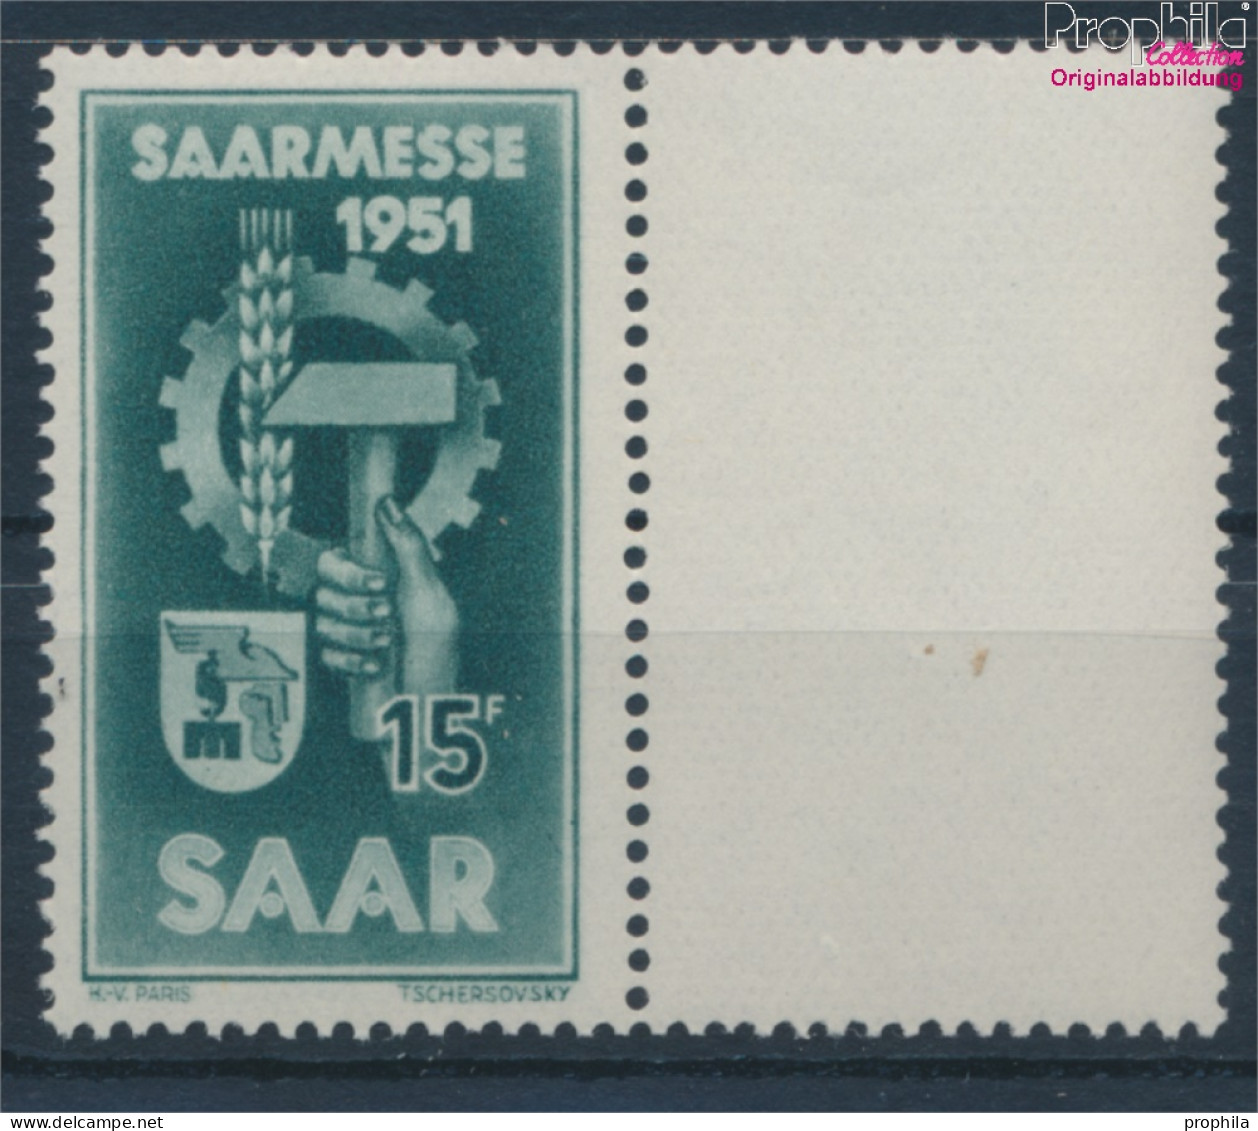 Saarland 306 (kompl.Ausg.) Postfrisch 1951 Saarmesse (10357410 - Usados